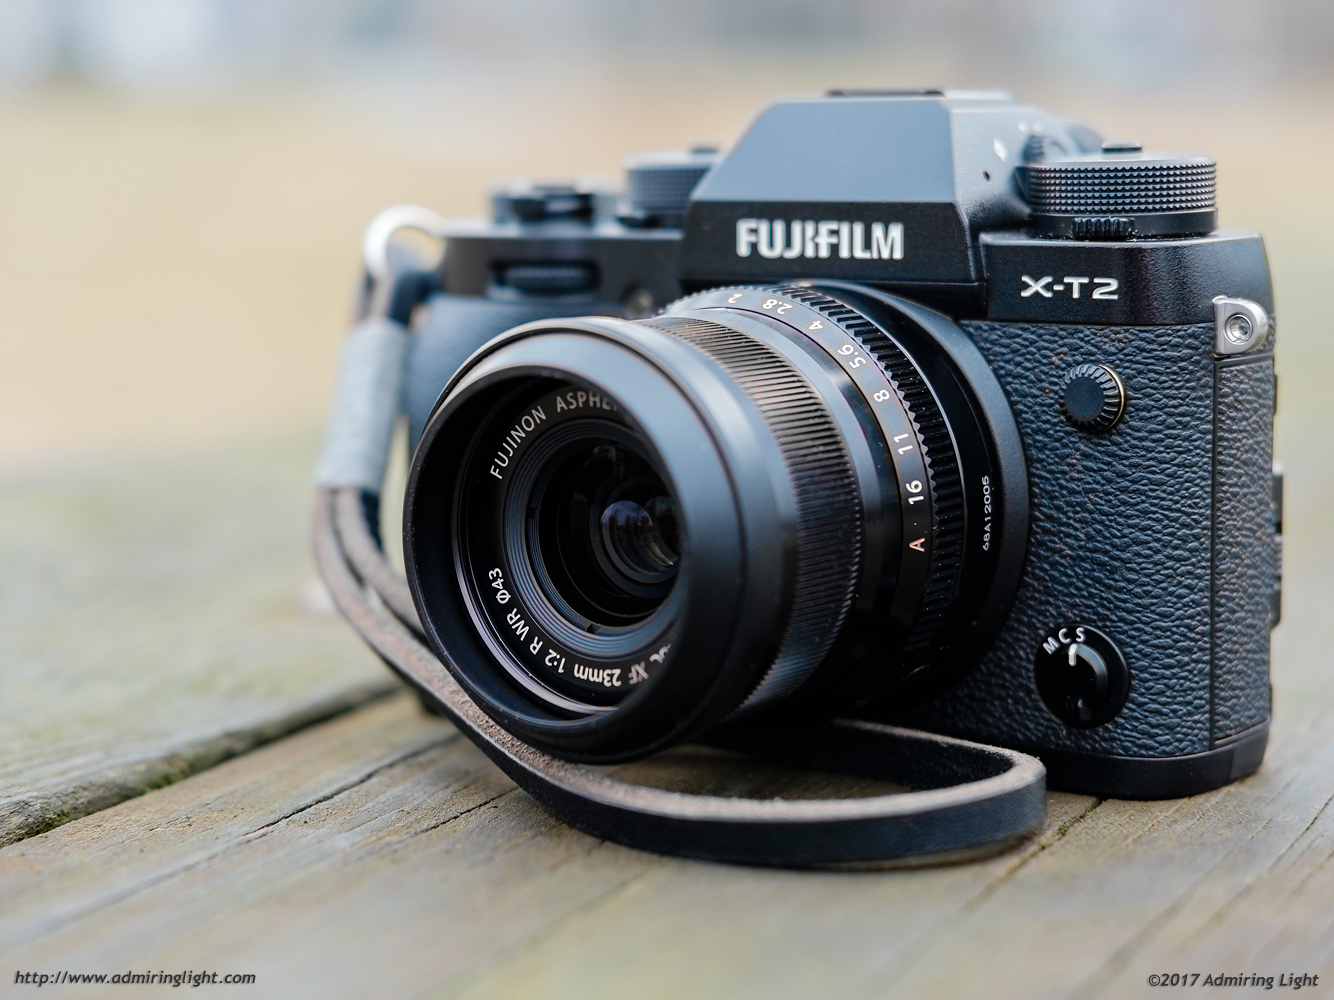 Review: Fujifilm X-T2 - Admiring Light